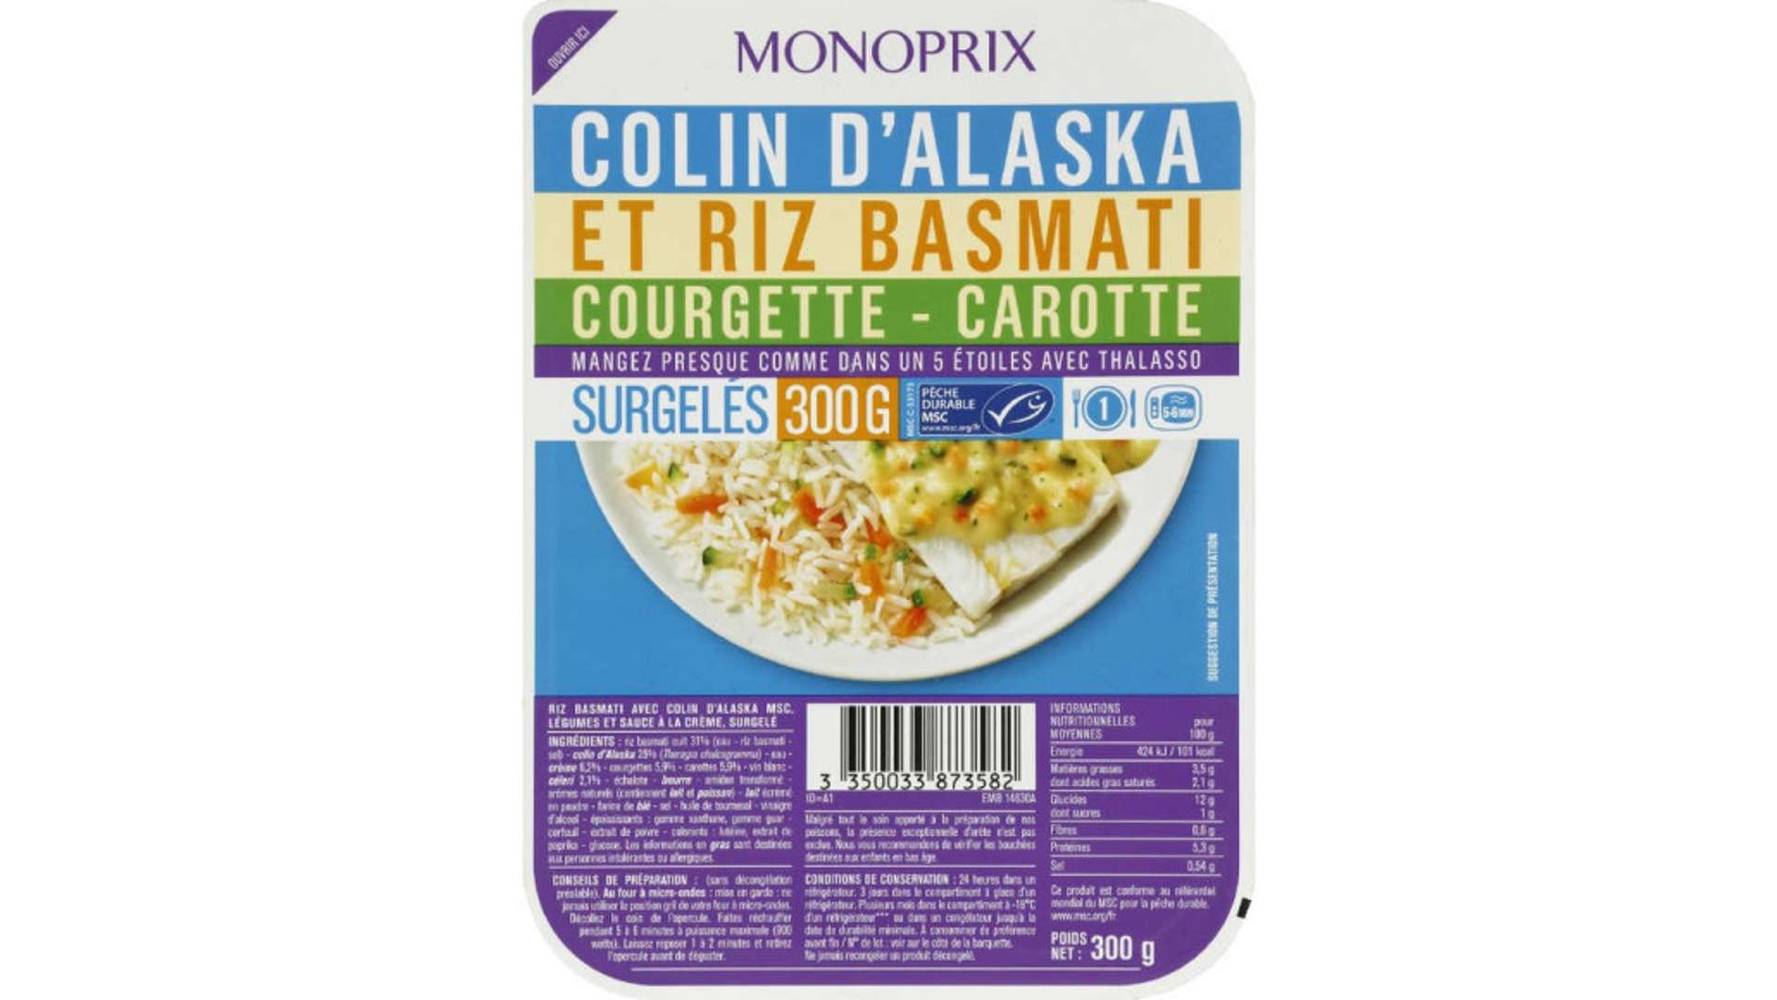 Monoprix Colin alaska et riz @ la courgette La boite de 300g